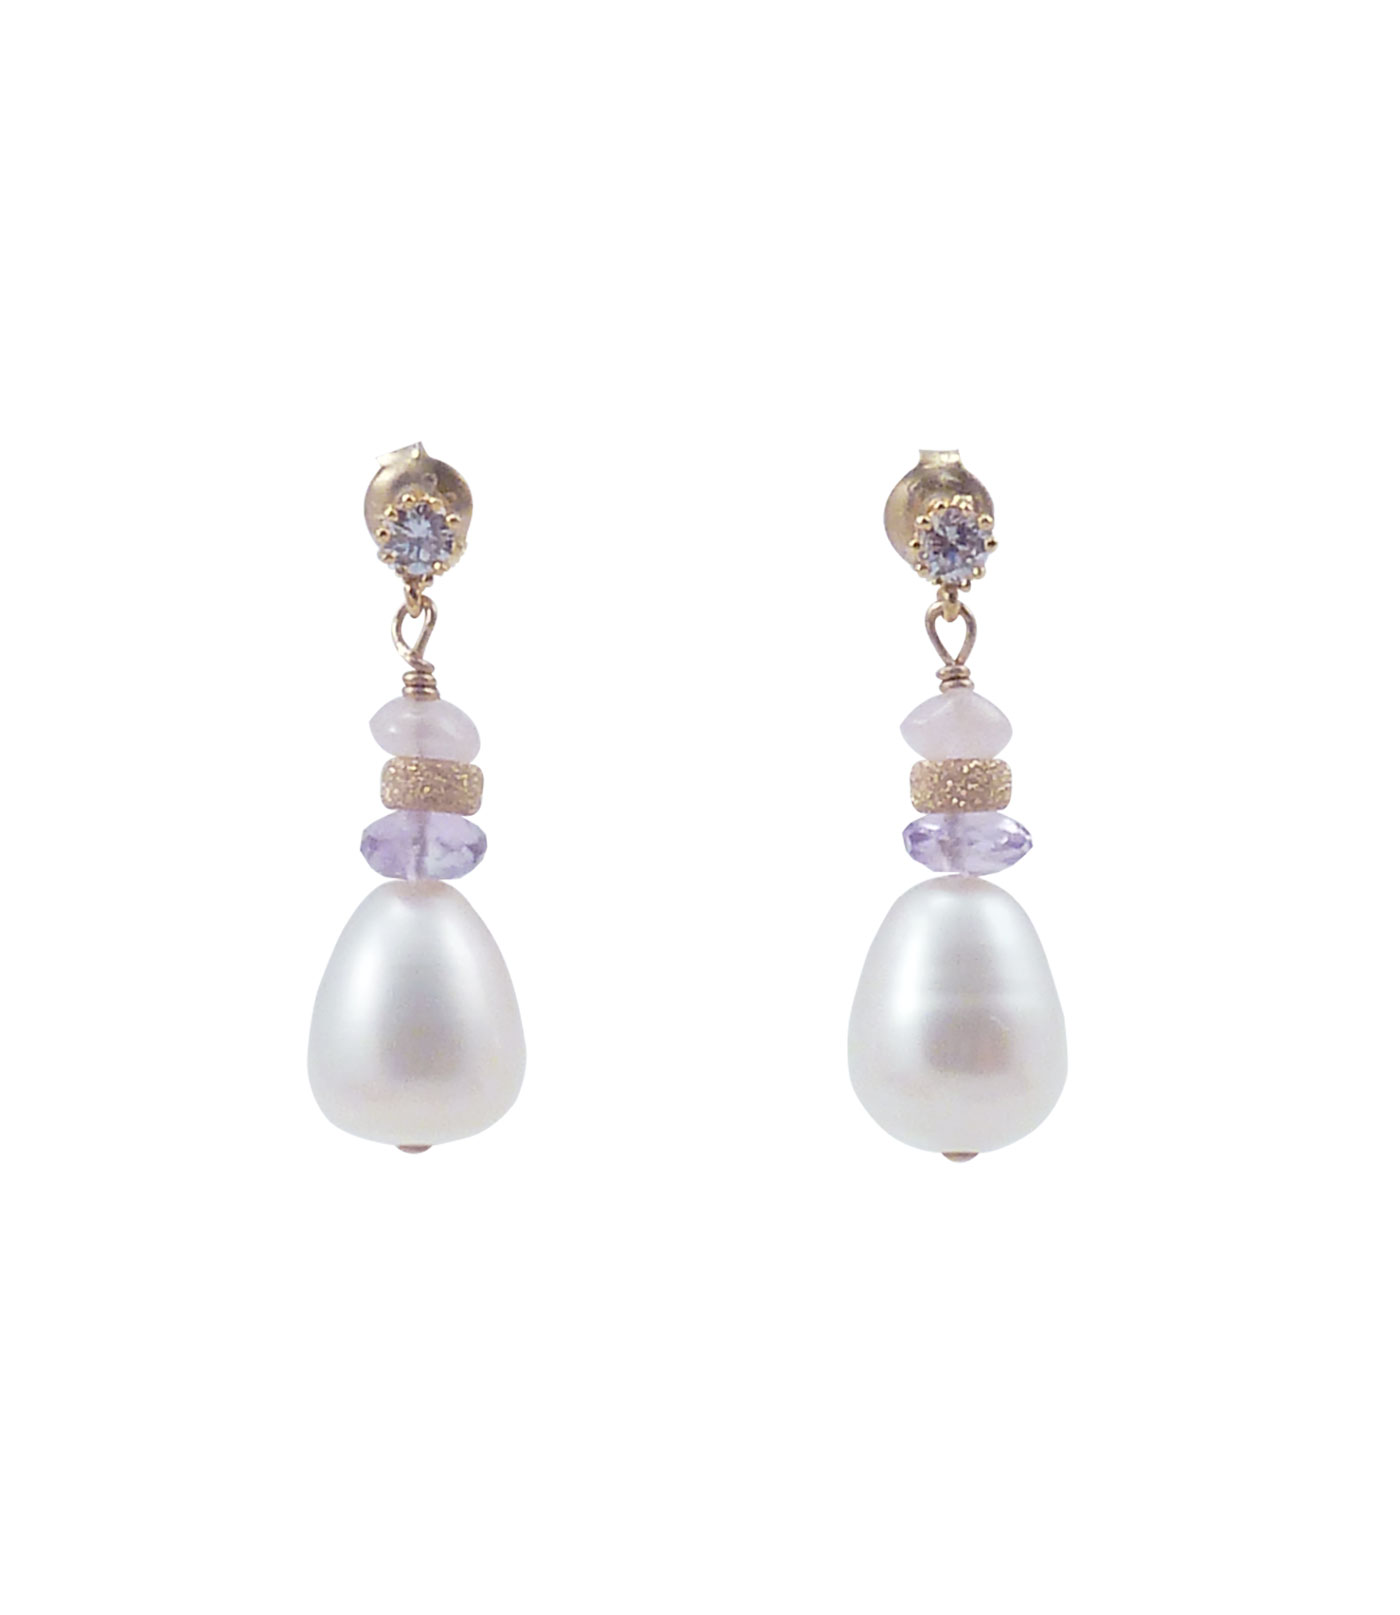 Designer pearl earrings, amethyst, drop-shaped pearls and pink quartz